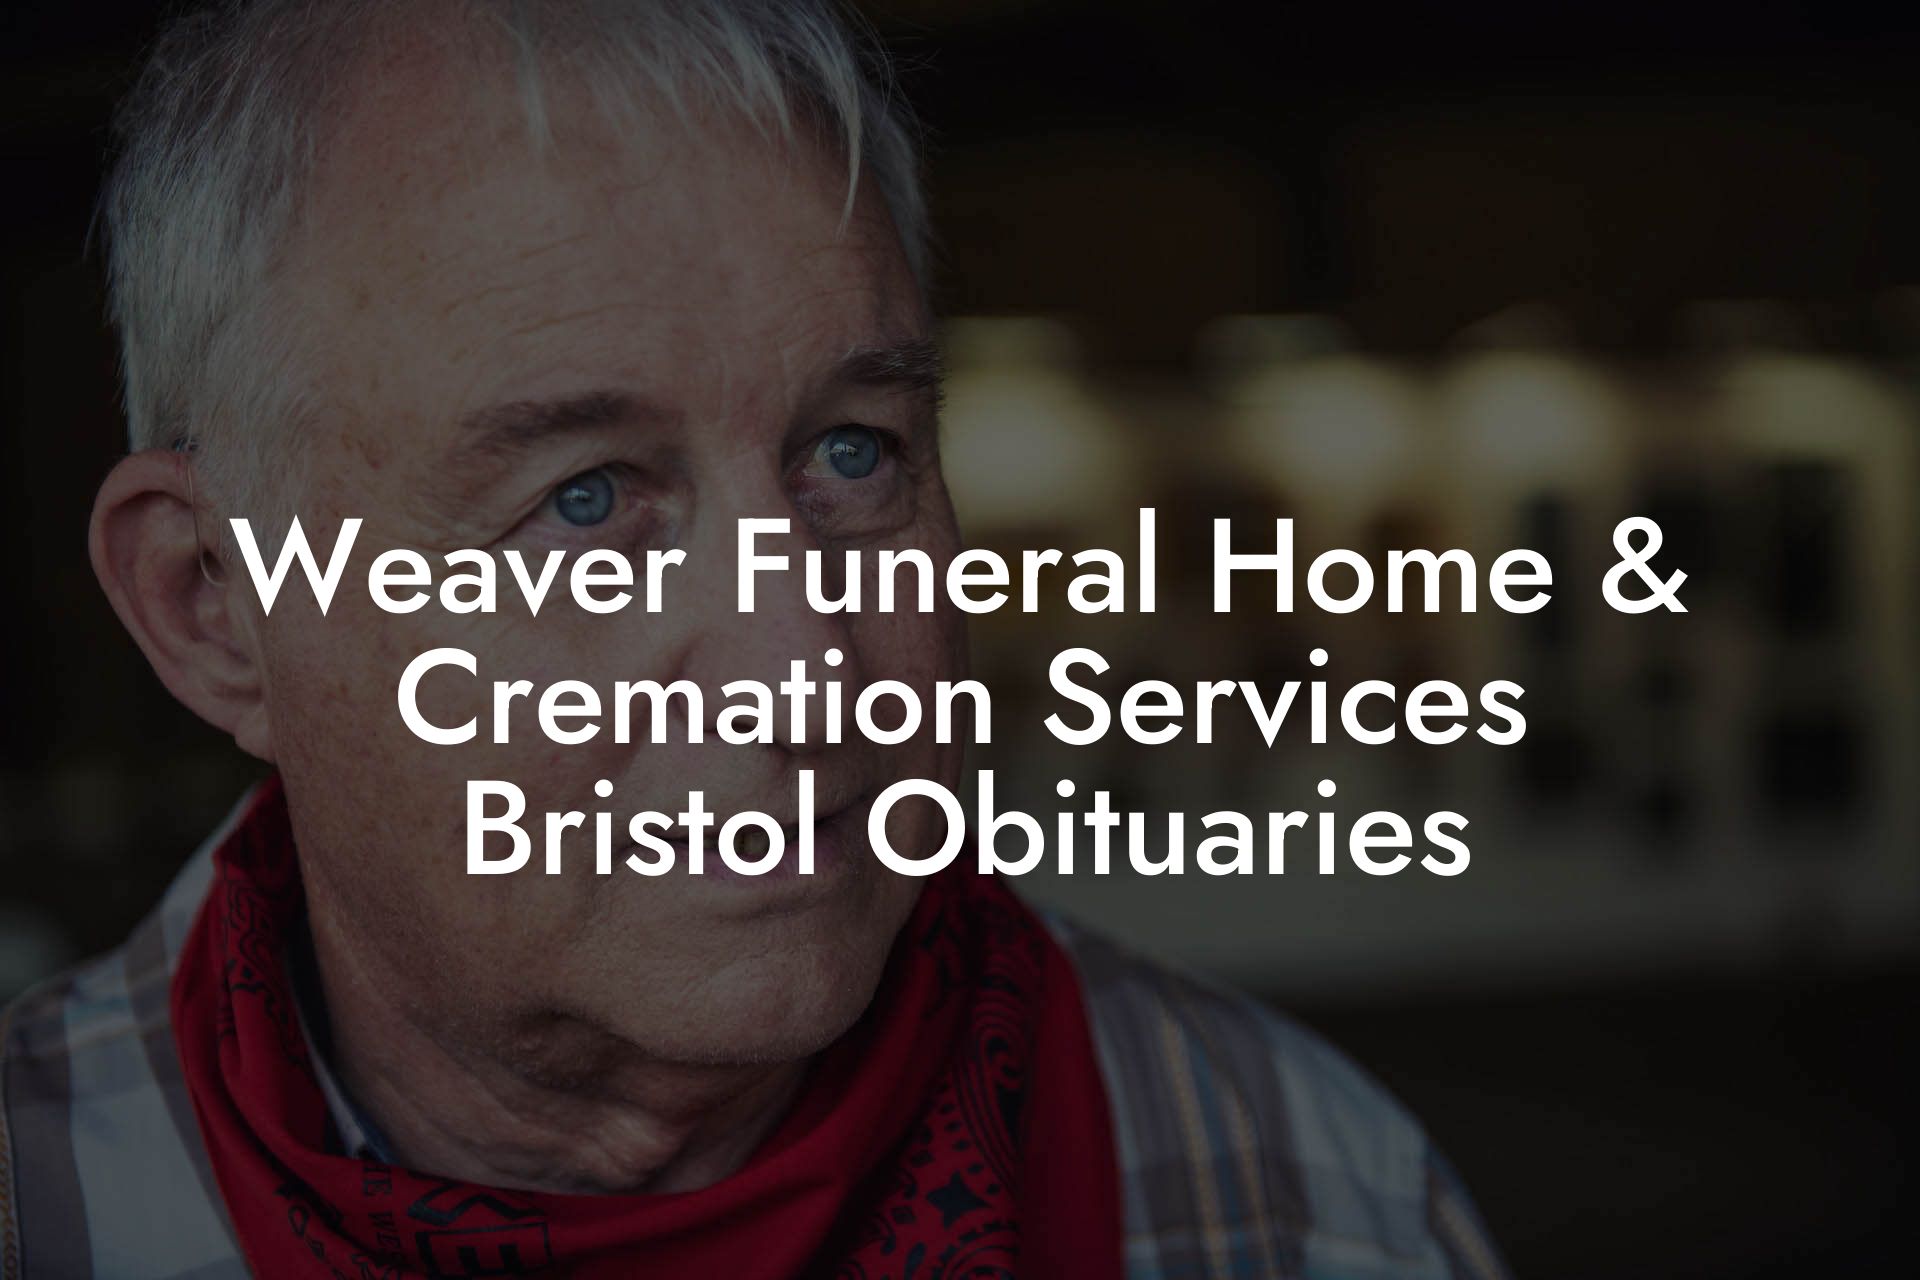 Weaver Funeral Home & Cremation Services Bristol Obituaries